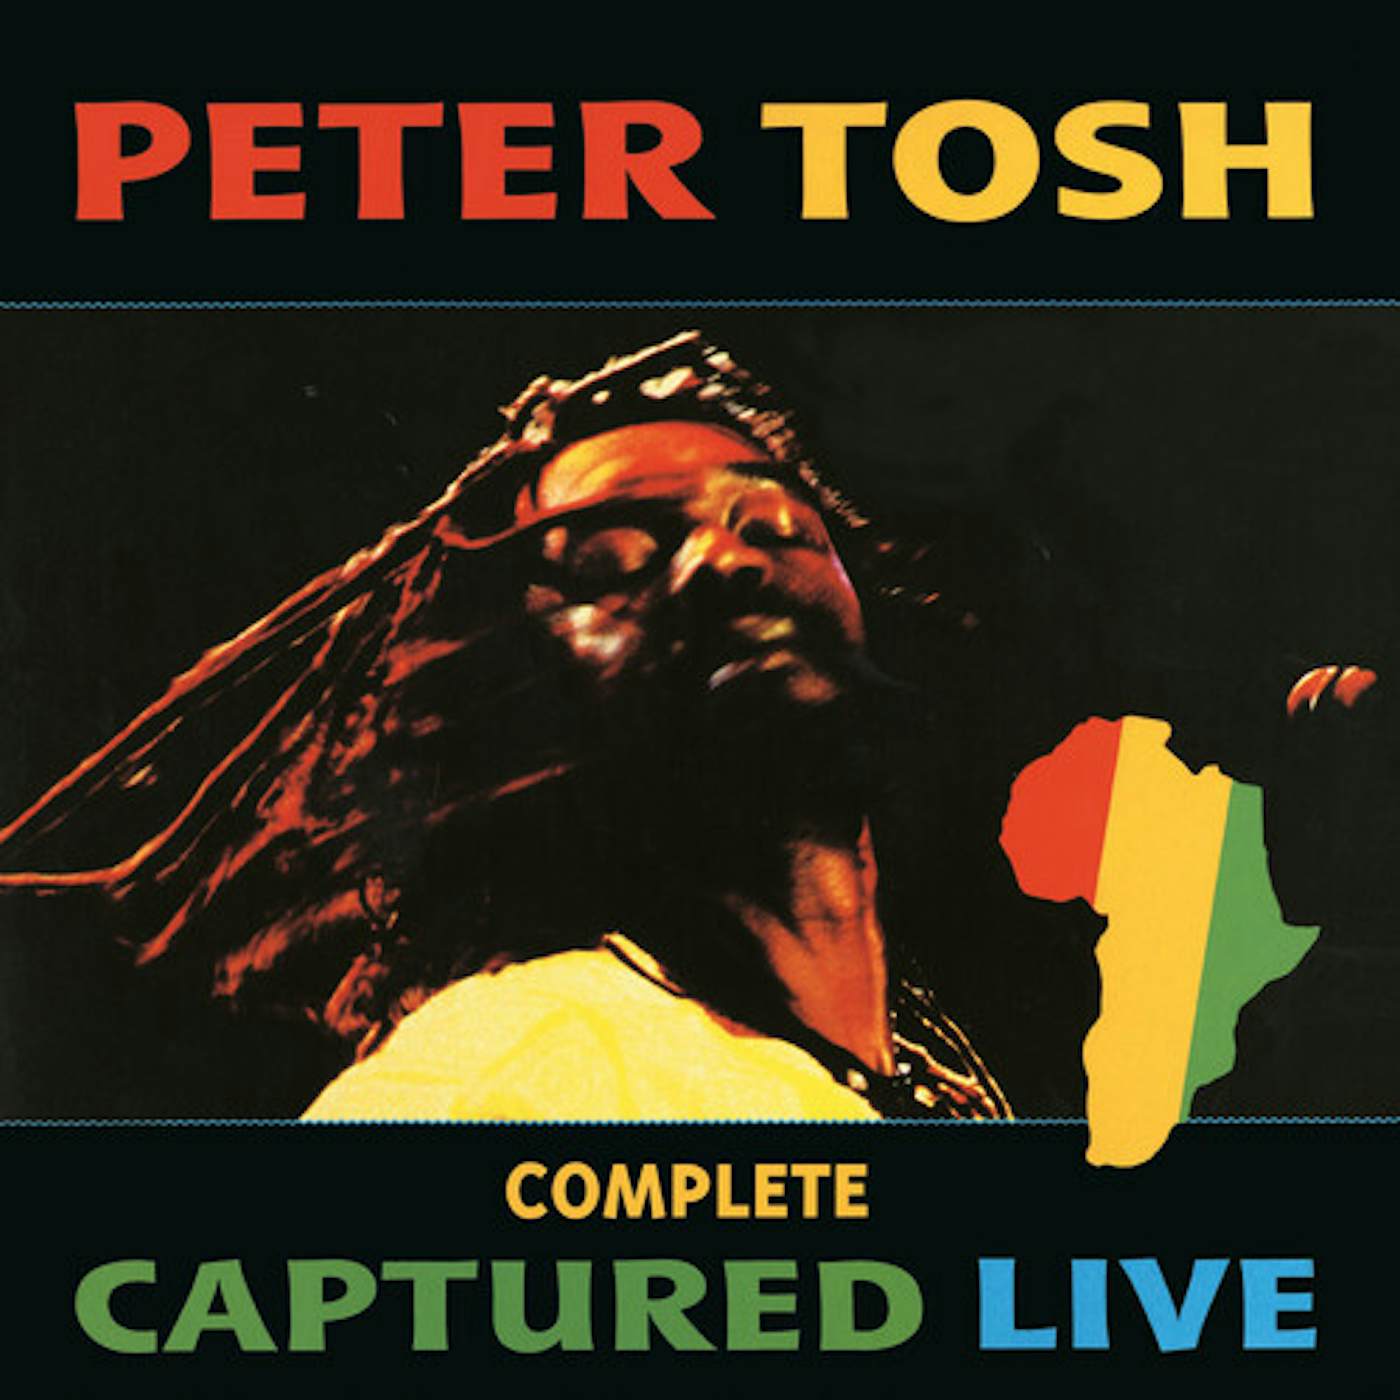 Peter Tosh Complete Captured Live Vinyl Record